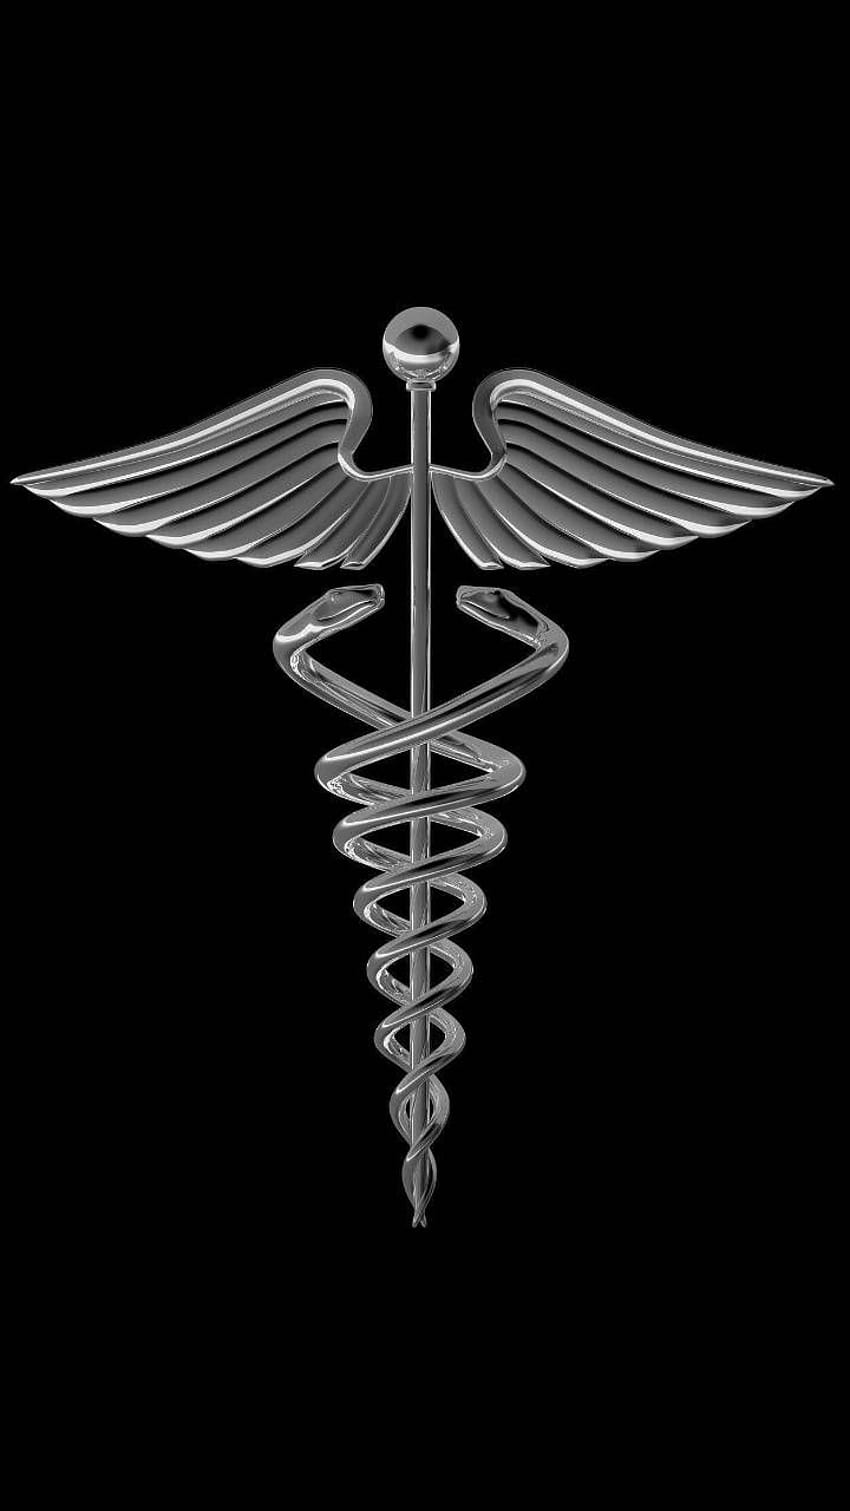 doctors logos symbols